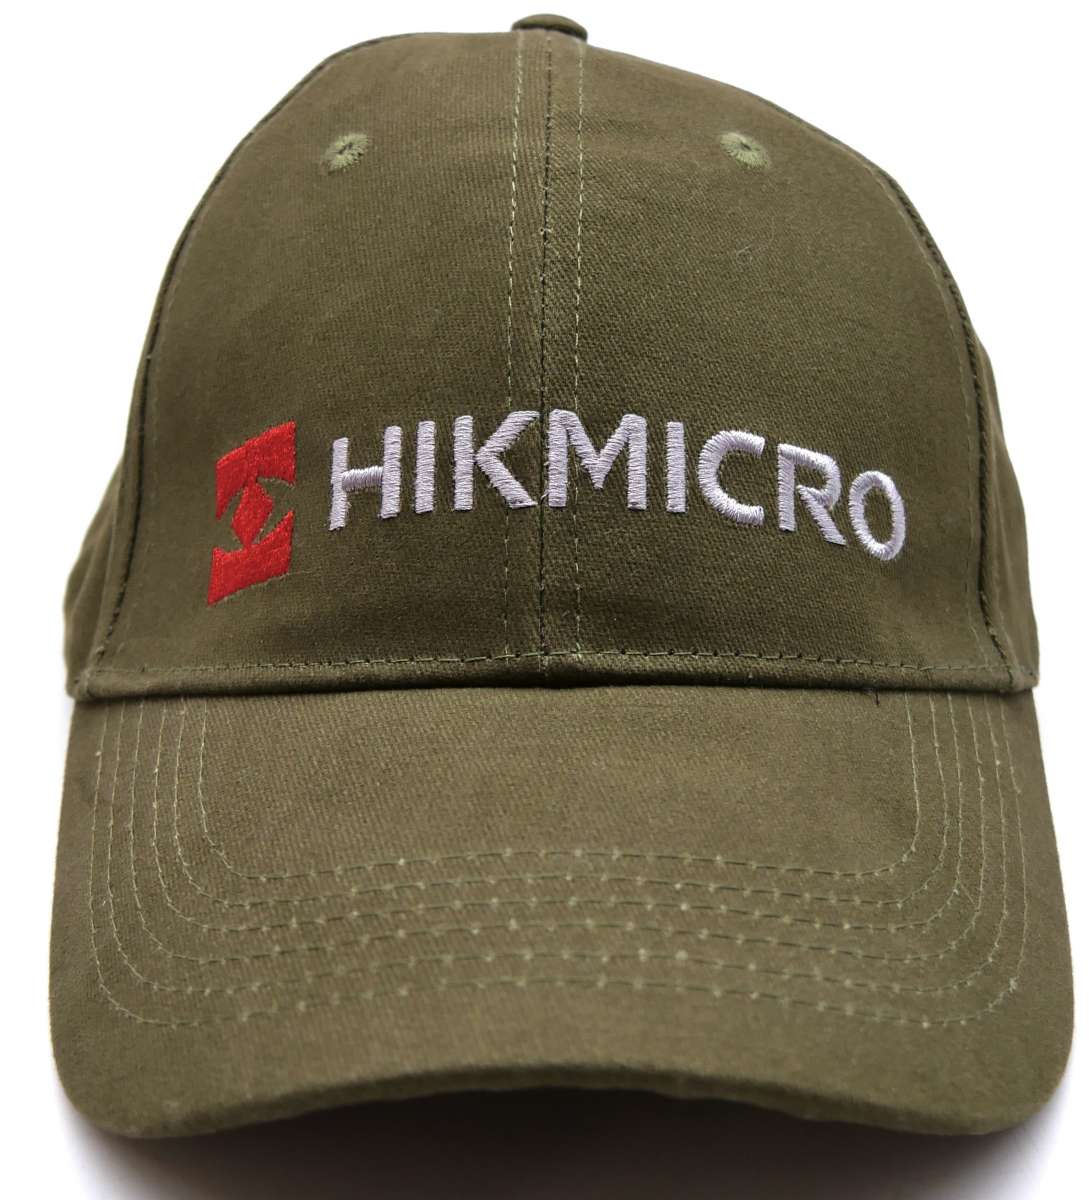 Cap "Hikmicro"